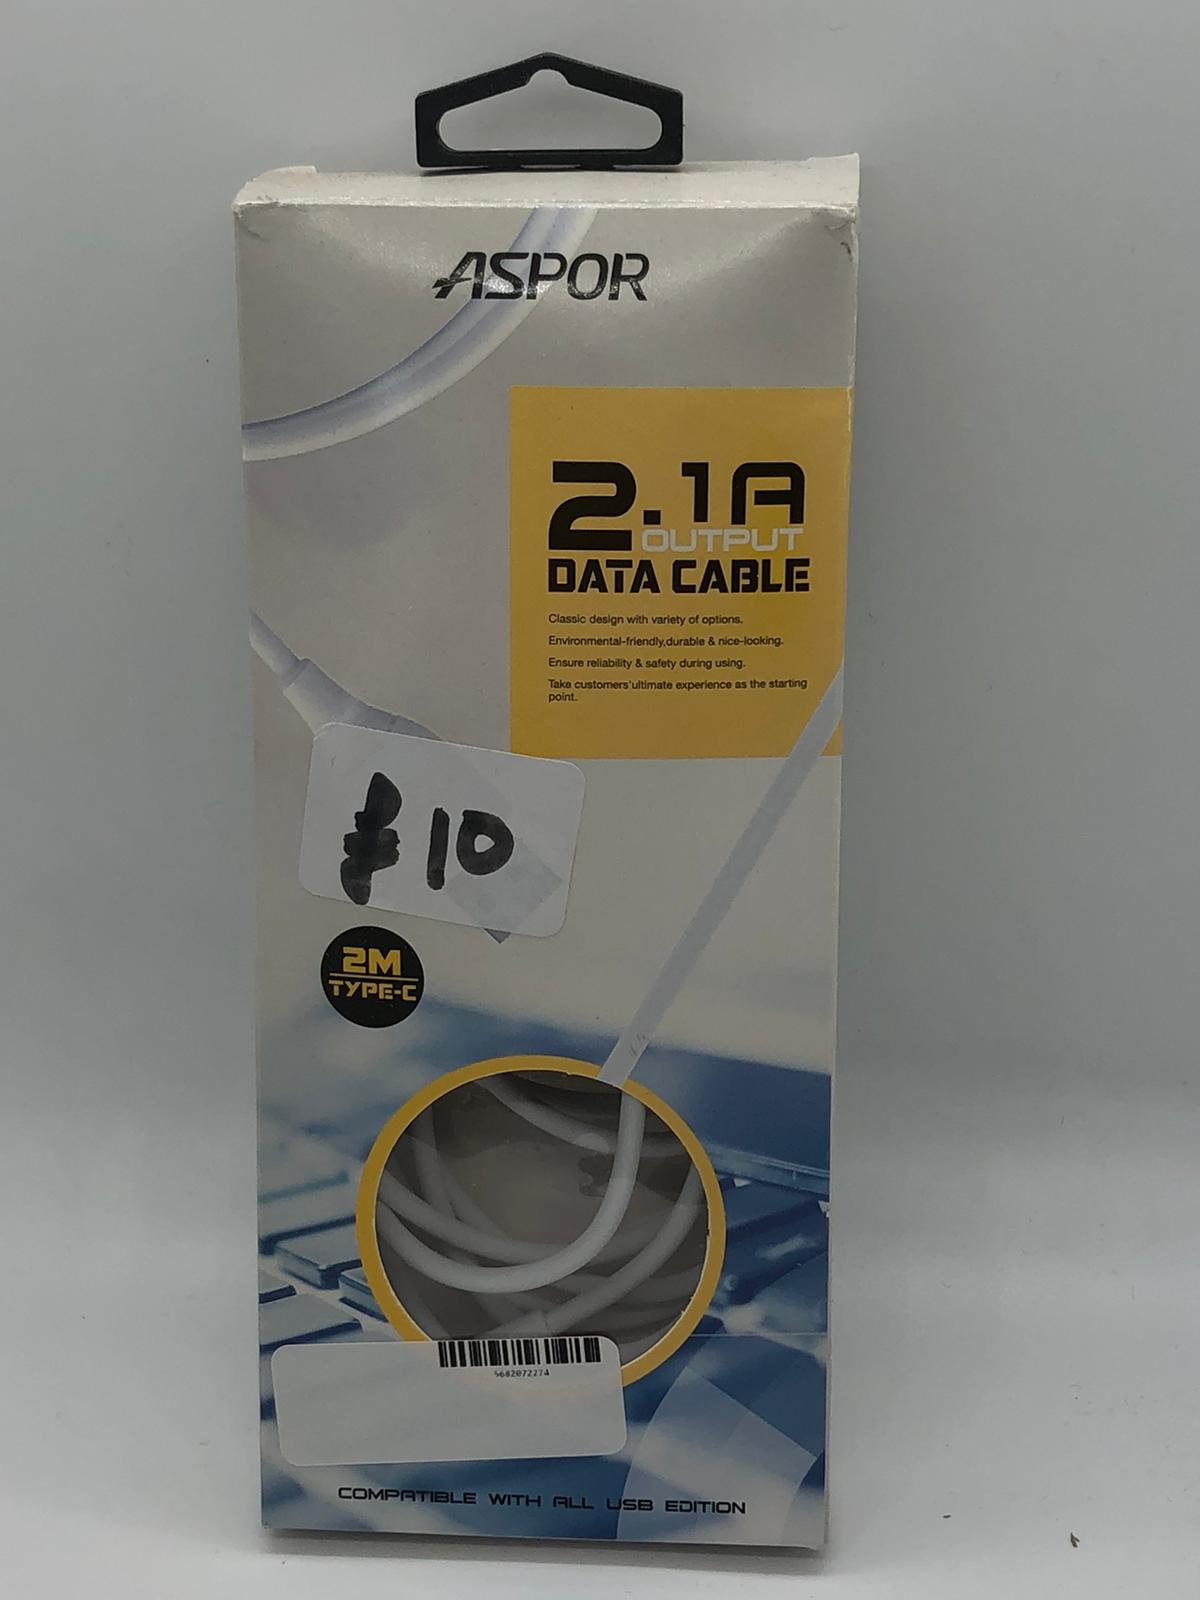 Aspor 2.1a Output Data Cable